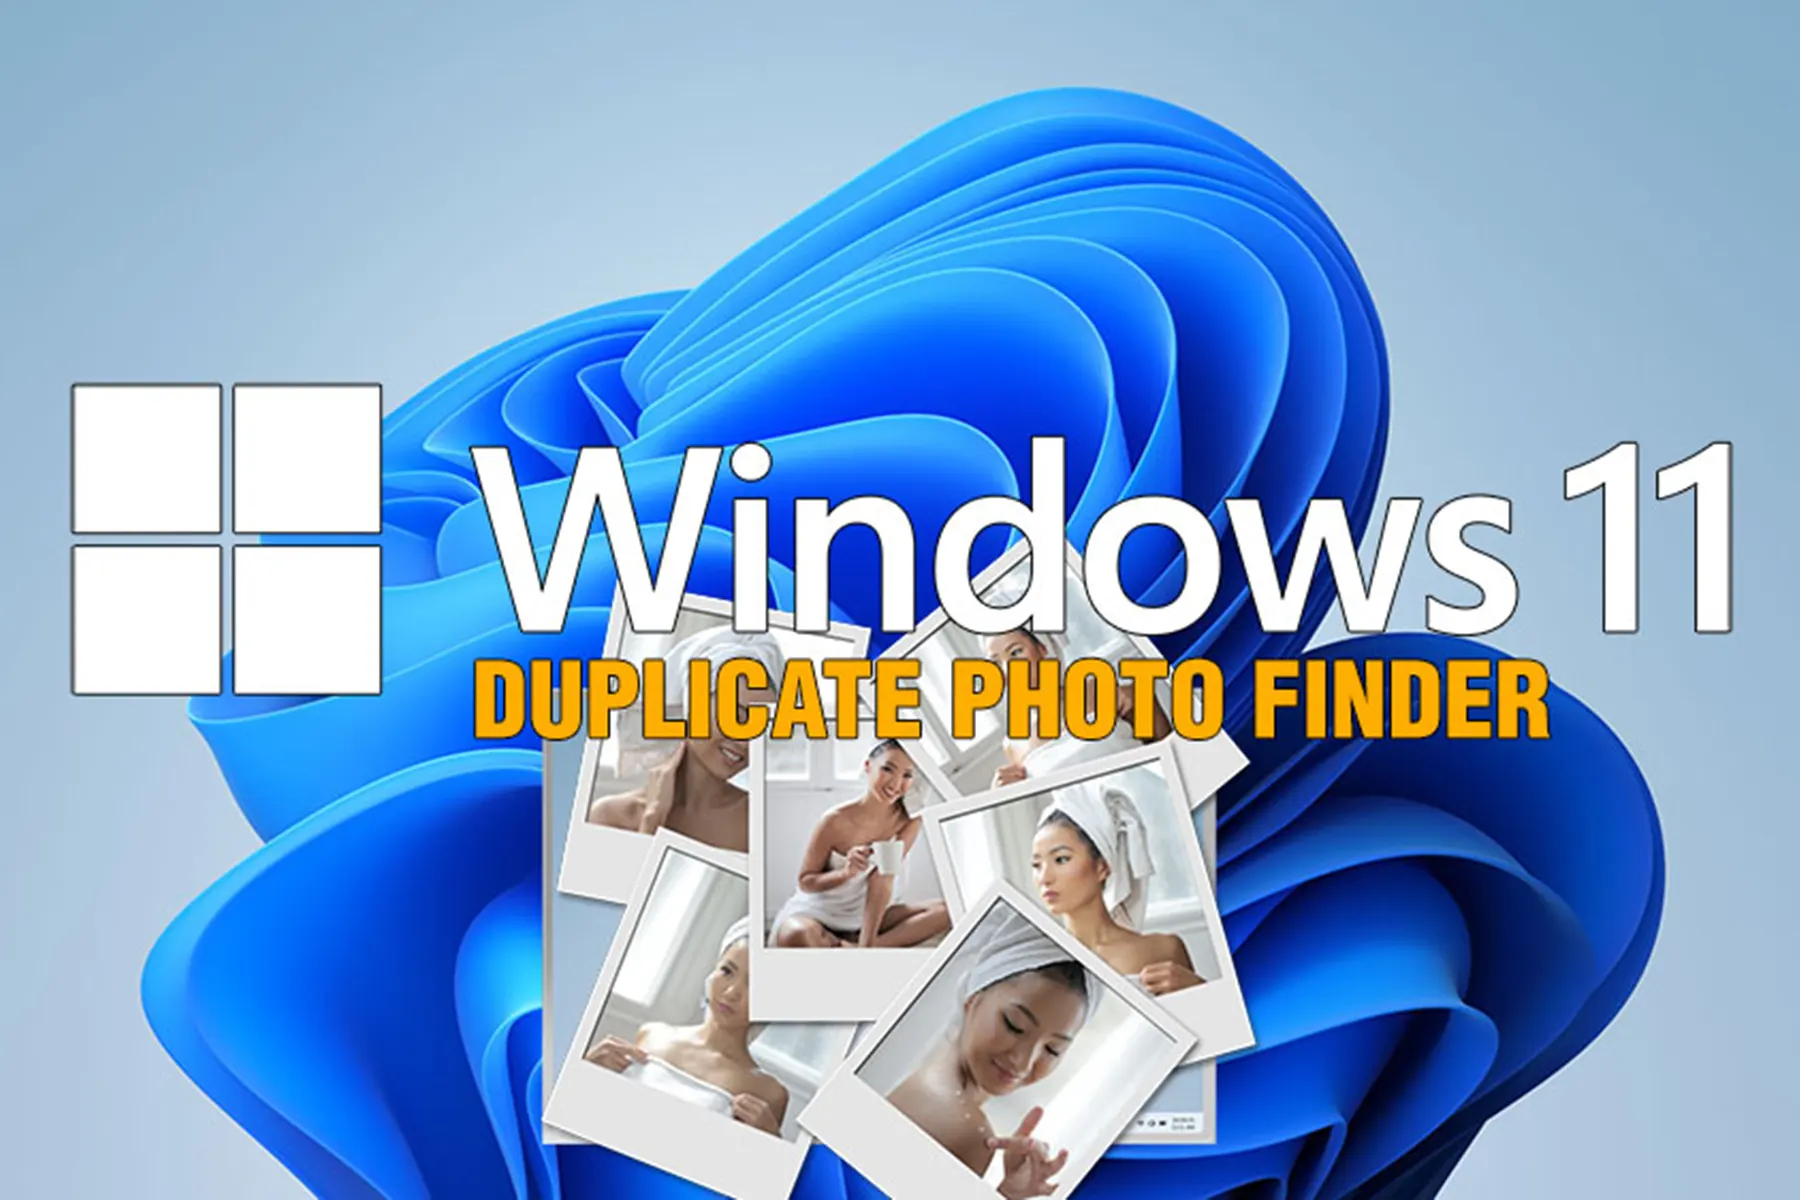 Windows 11 Duplicate Photo Finder